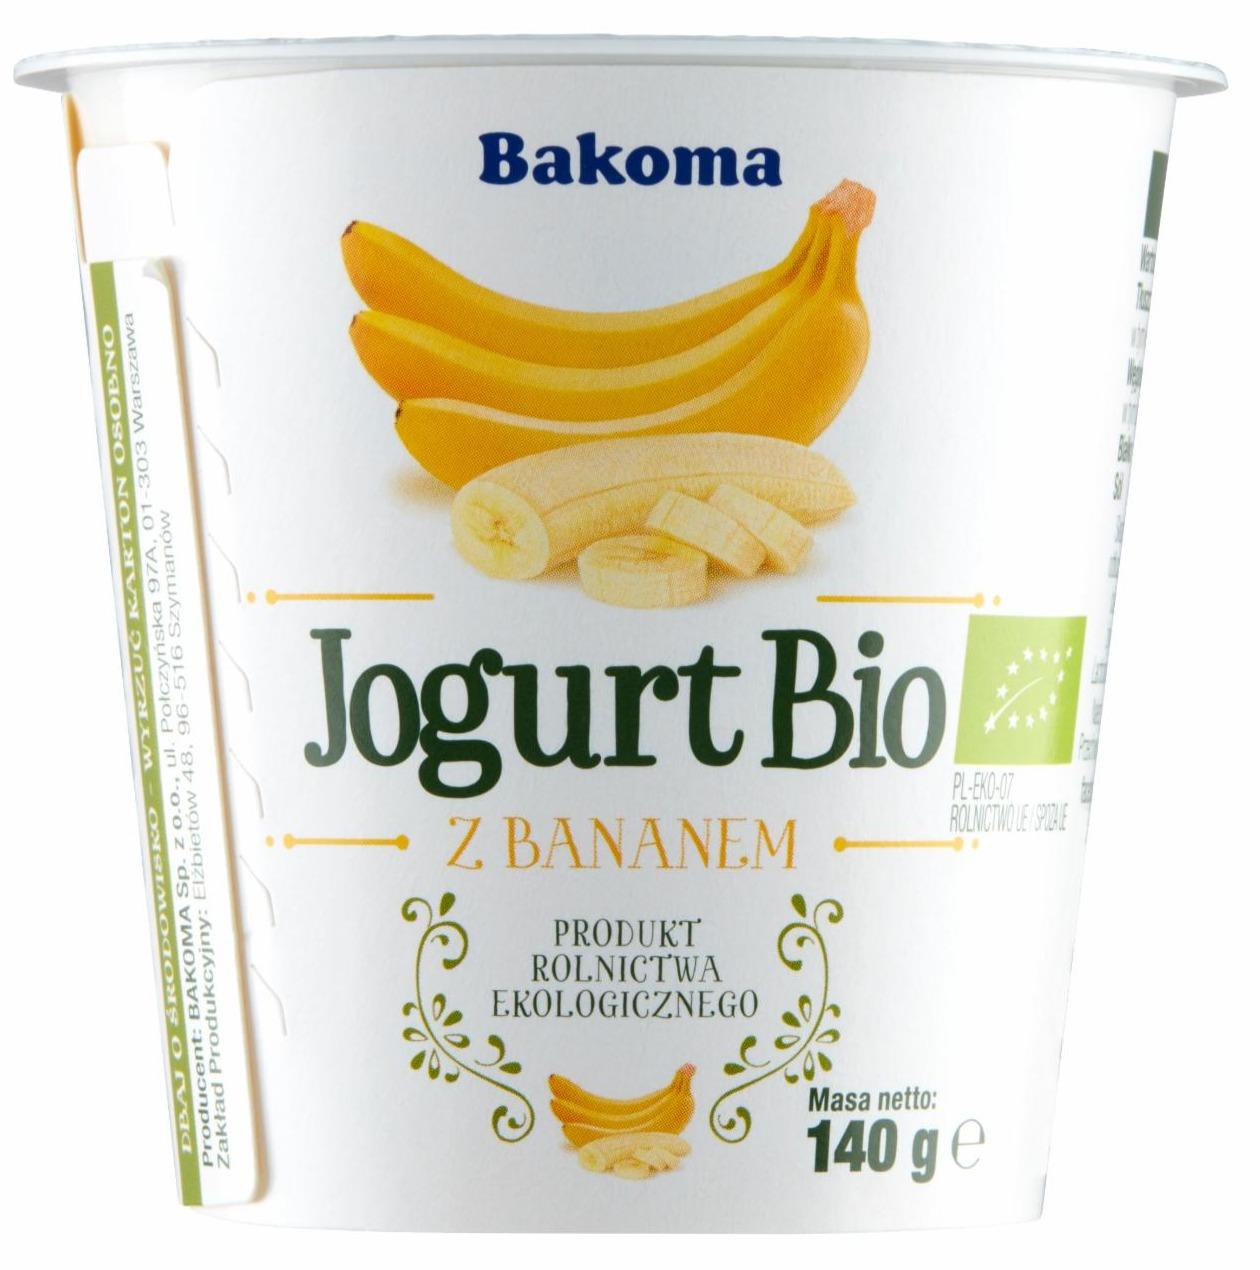 Zdjęcia - Jogurt Bio z bananem Bakoma